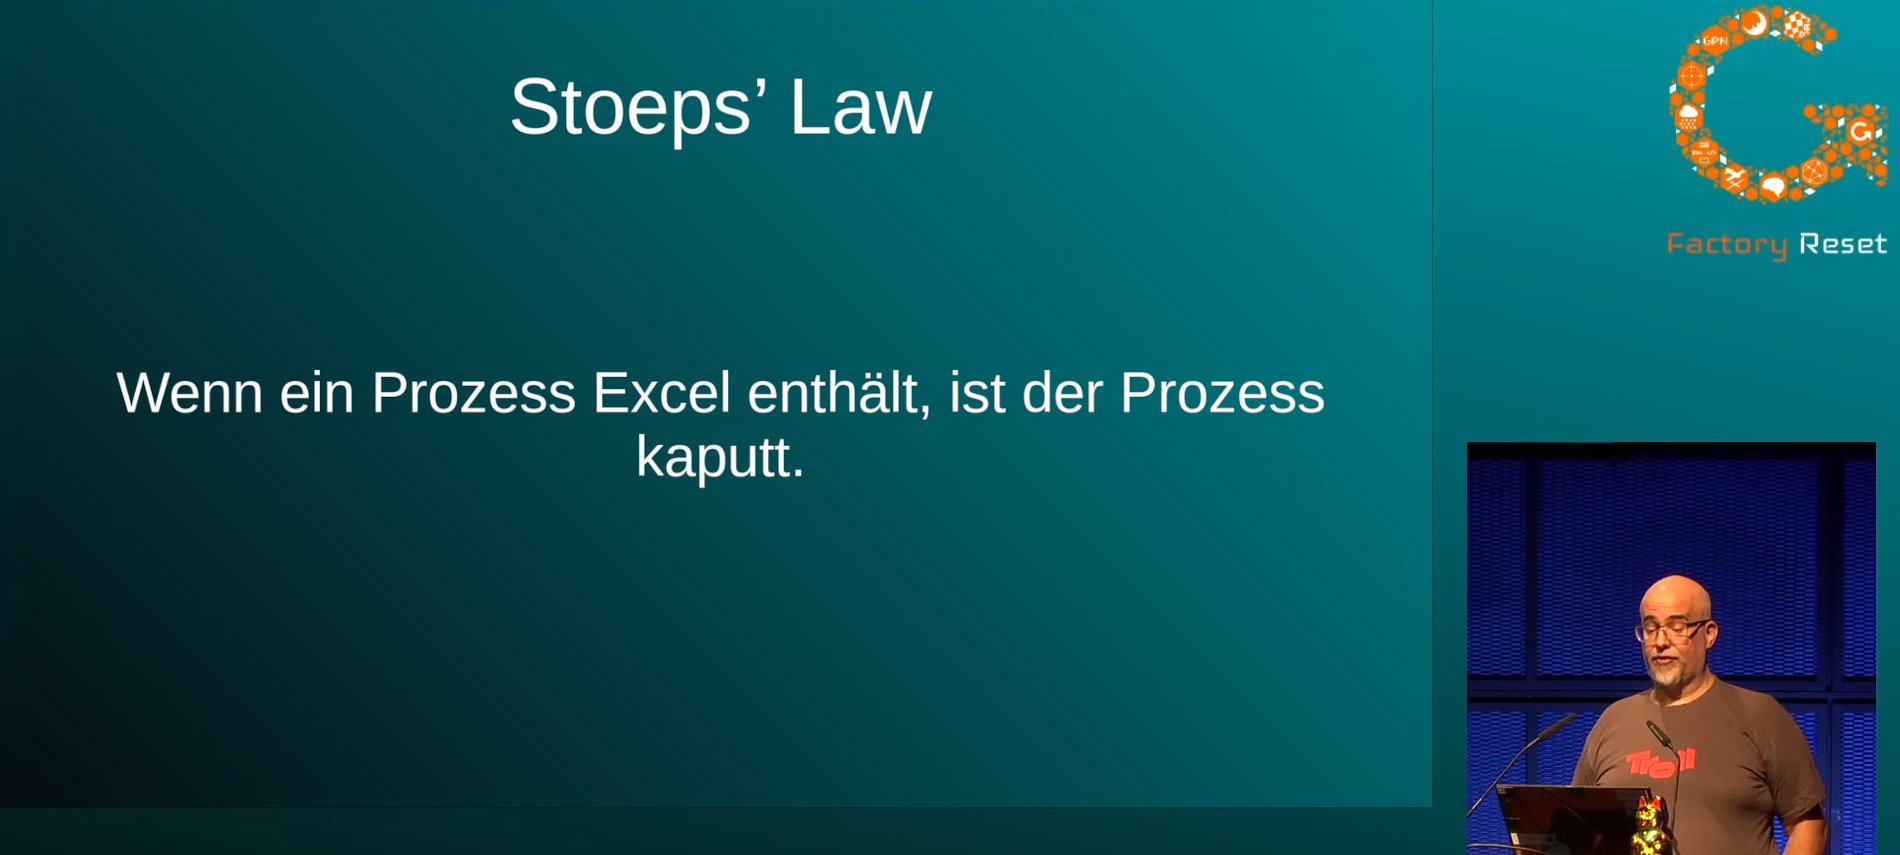 stoeps law